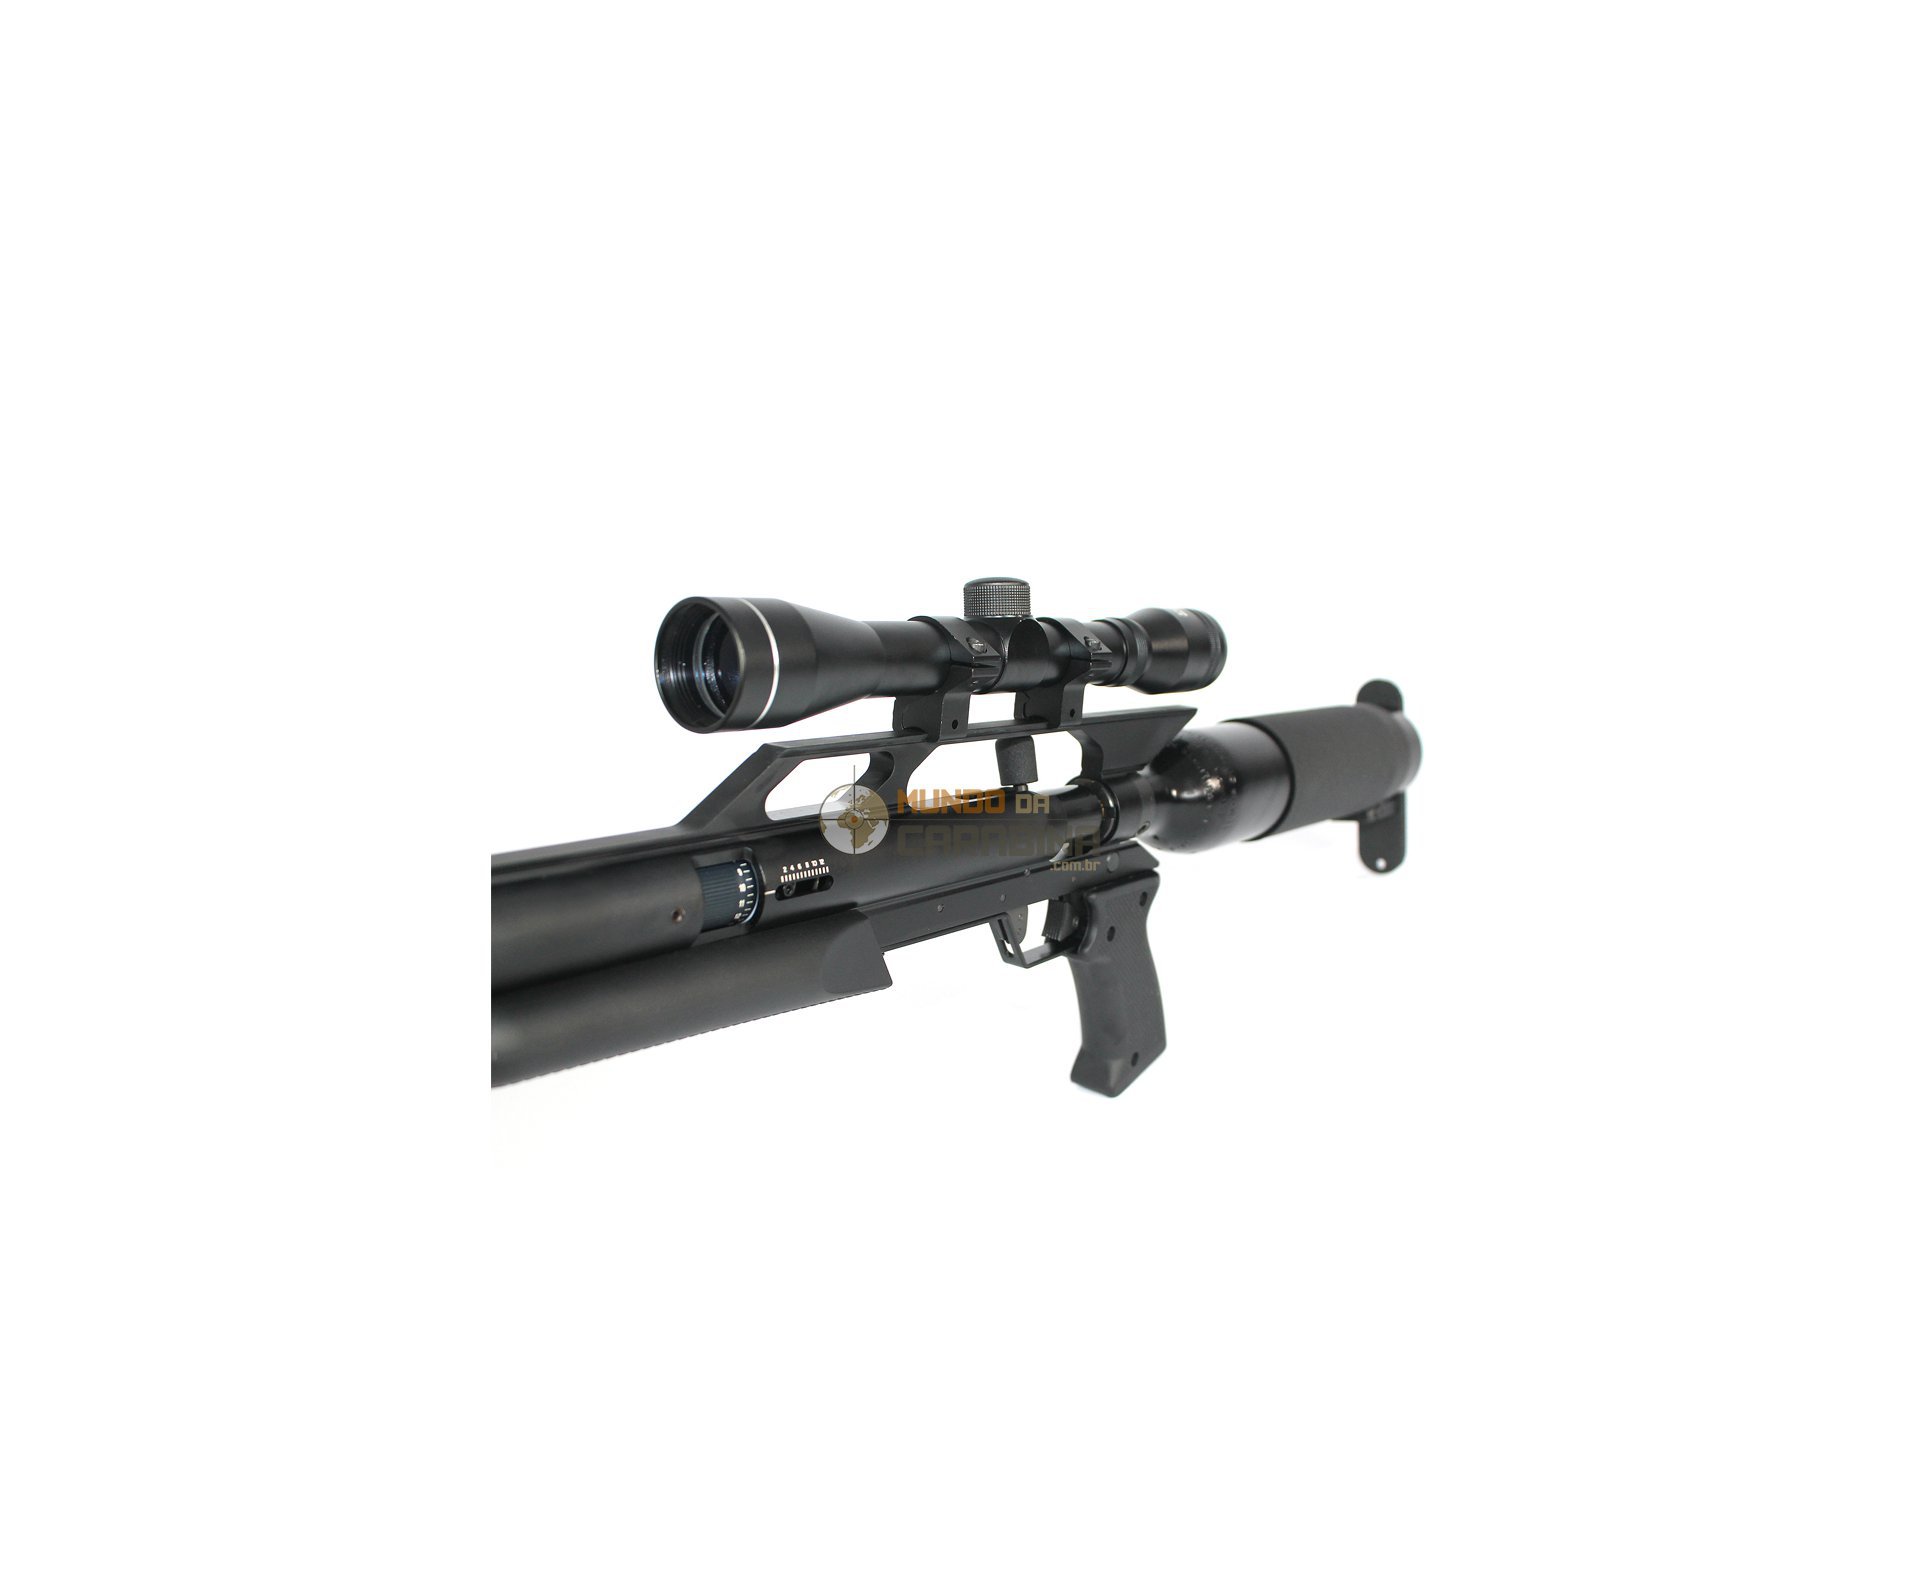 Rifle Pcp Gunpower Sss + Luneta 4x32 + Case Buffalo + Supressor + Bipé + Bandoleira Cal 5,5mm